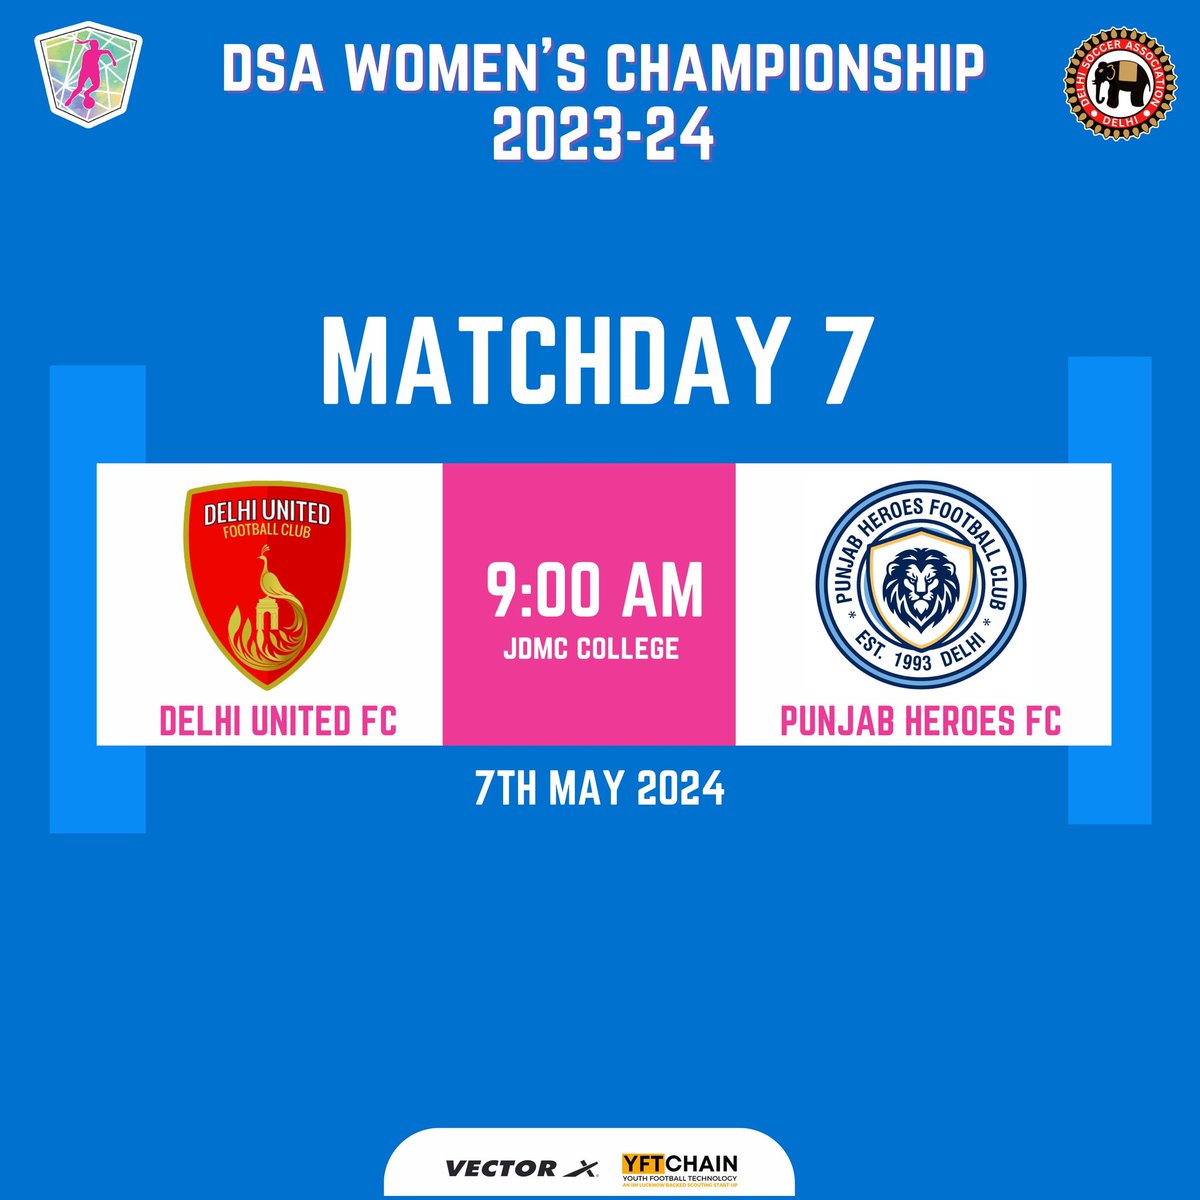 MATCHDAY 7️⃣

DSA WOMEN'S CHAMPIONSHIP 2023-24 🏆

#footballdelhi #DSAWC #WomensChampionship 
#indianfootball